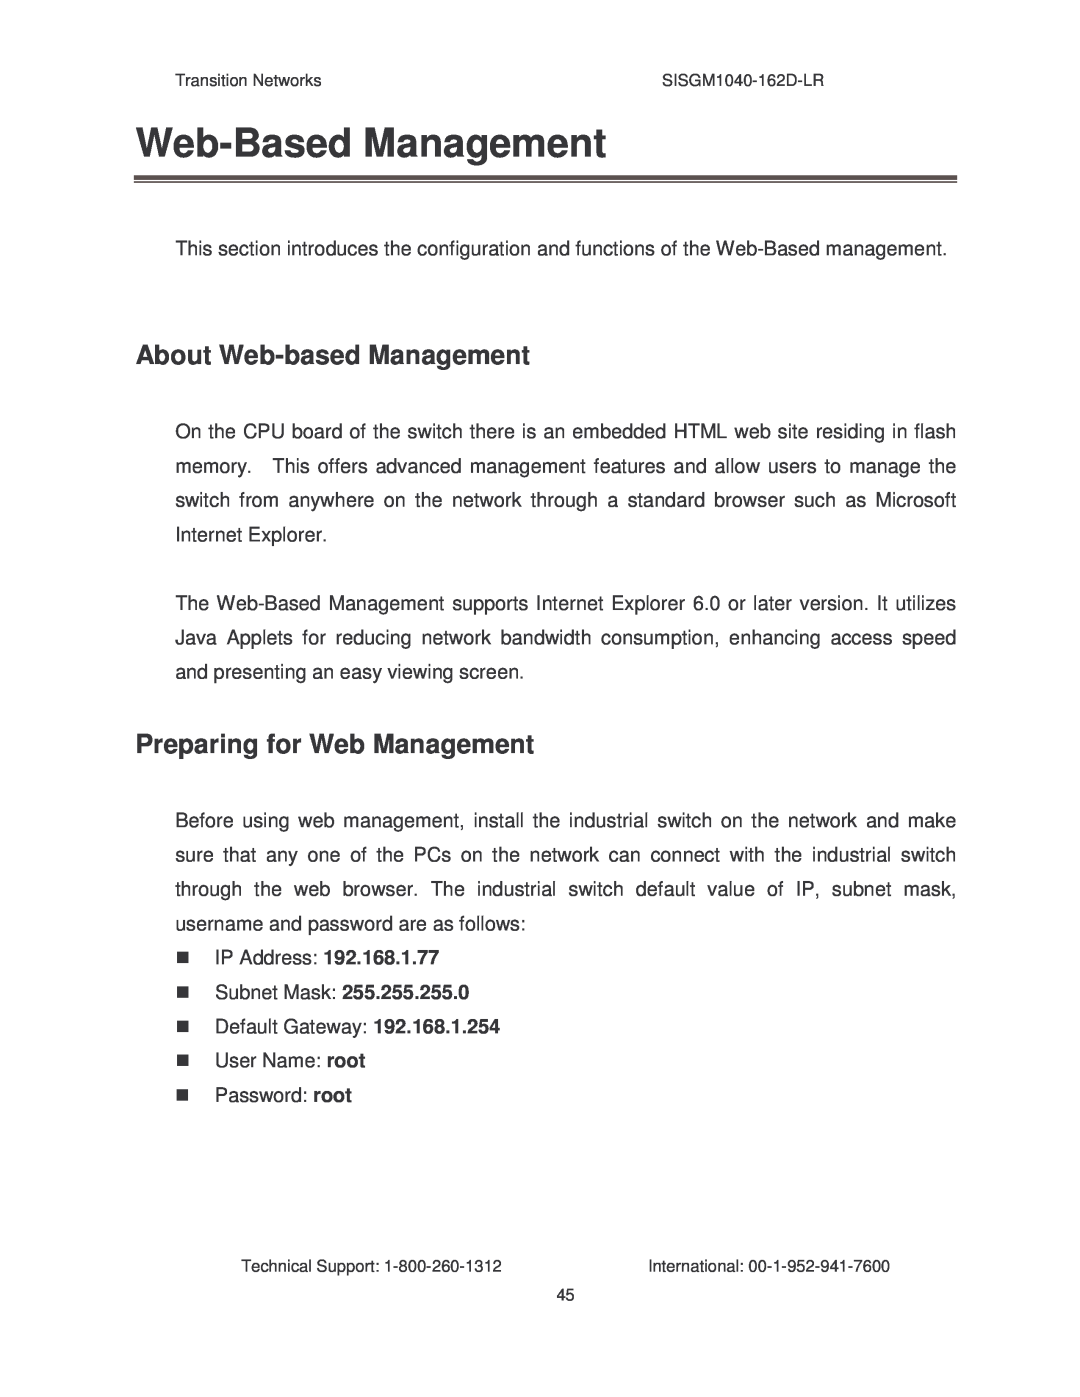 Transition Networks SISGM1040-162D manual Web-Based Management, About Web-based Management, Preparing for Web Management 